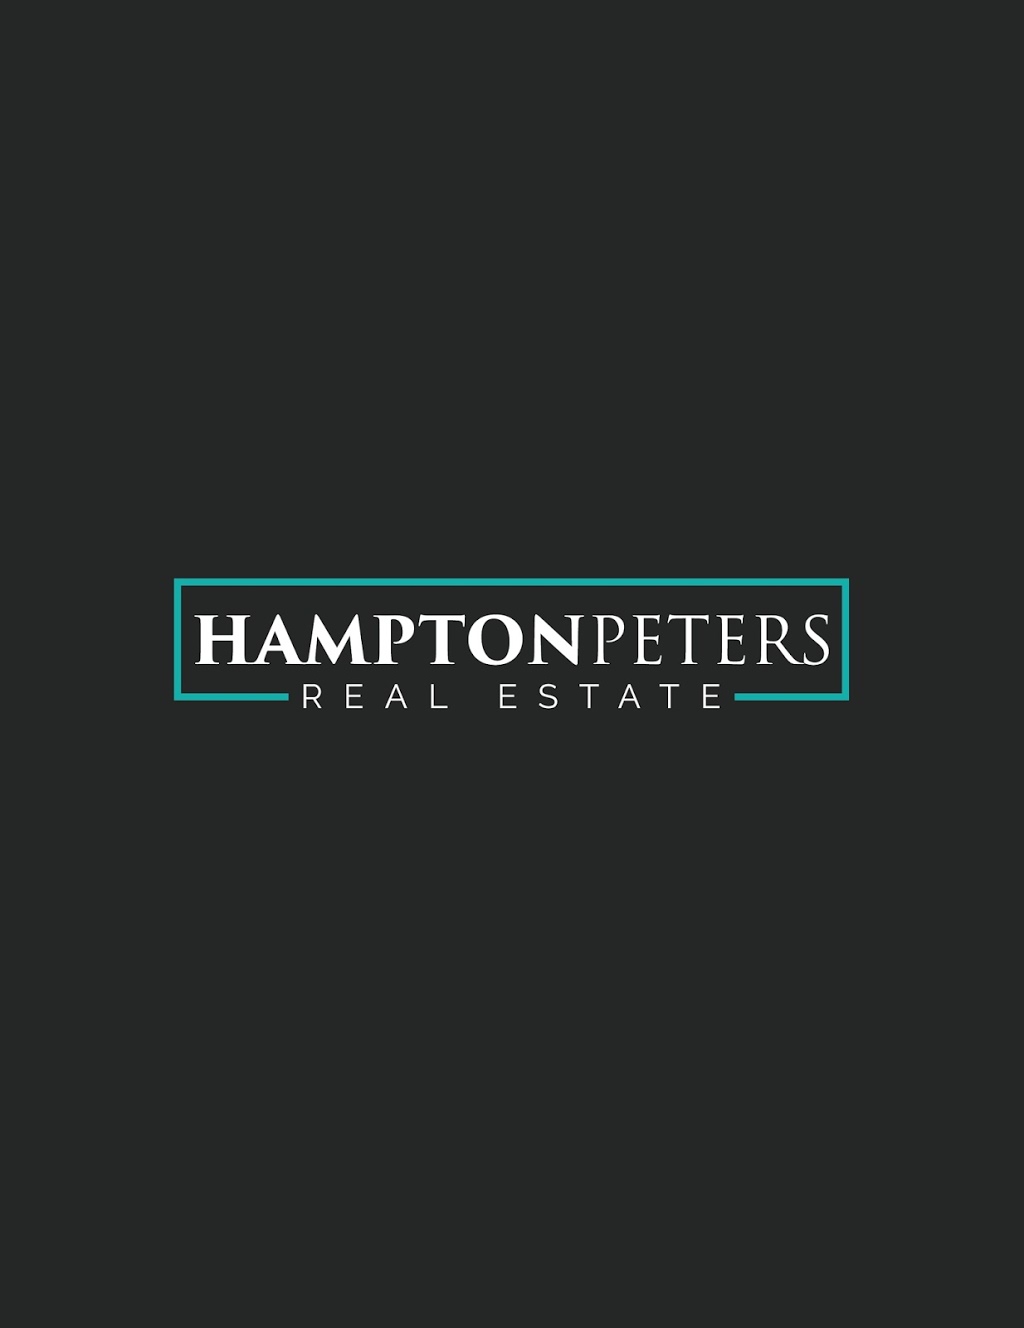 Hampton Peters Real Estate | real estate agency | 20 Alexander St, Burnie TAS 7320, Australia | 0364313373 OR +61 3 6431 3373